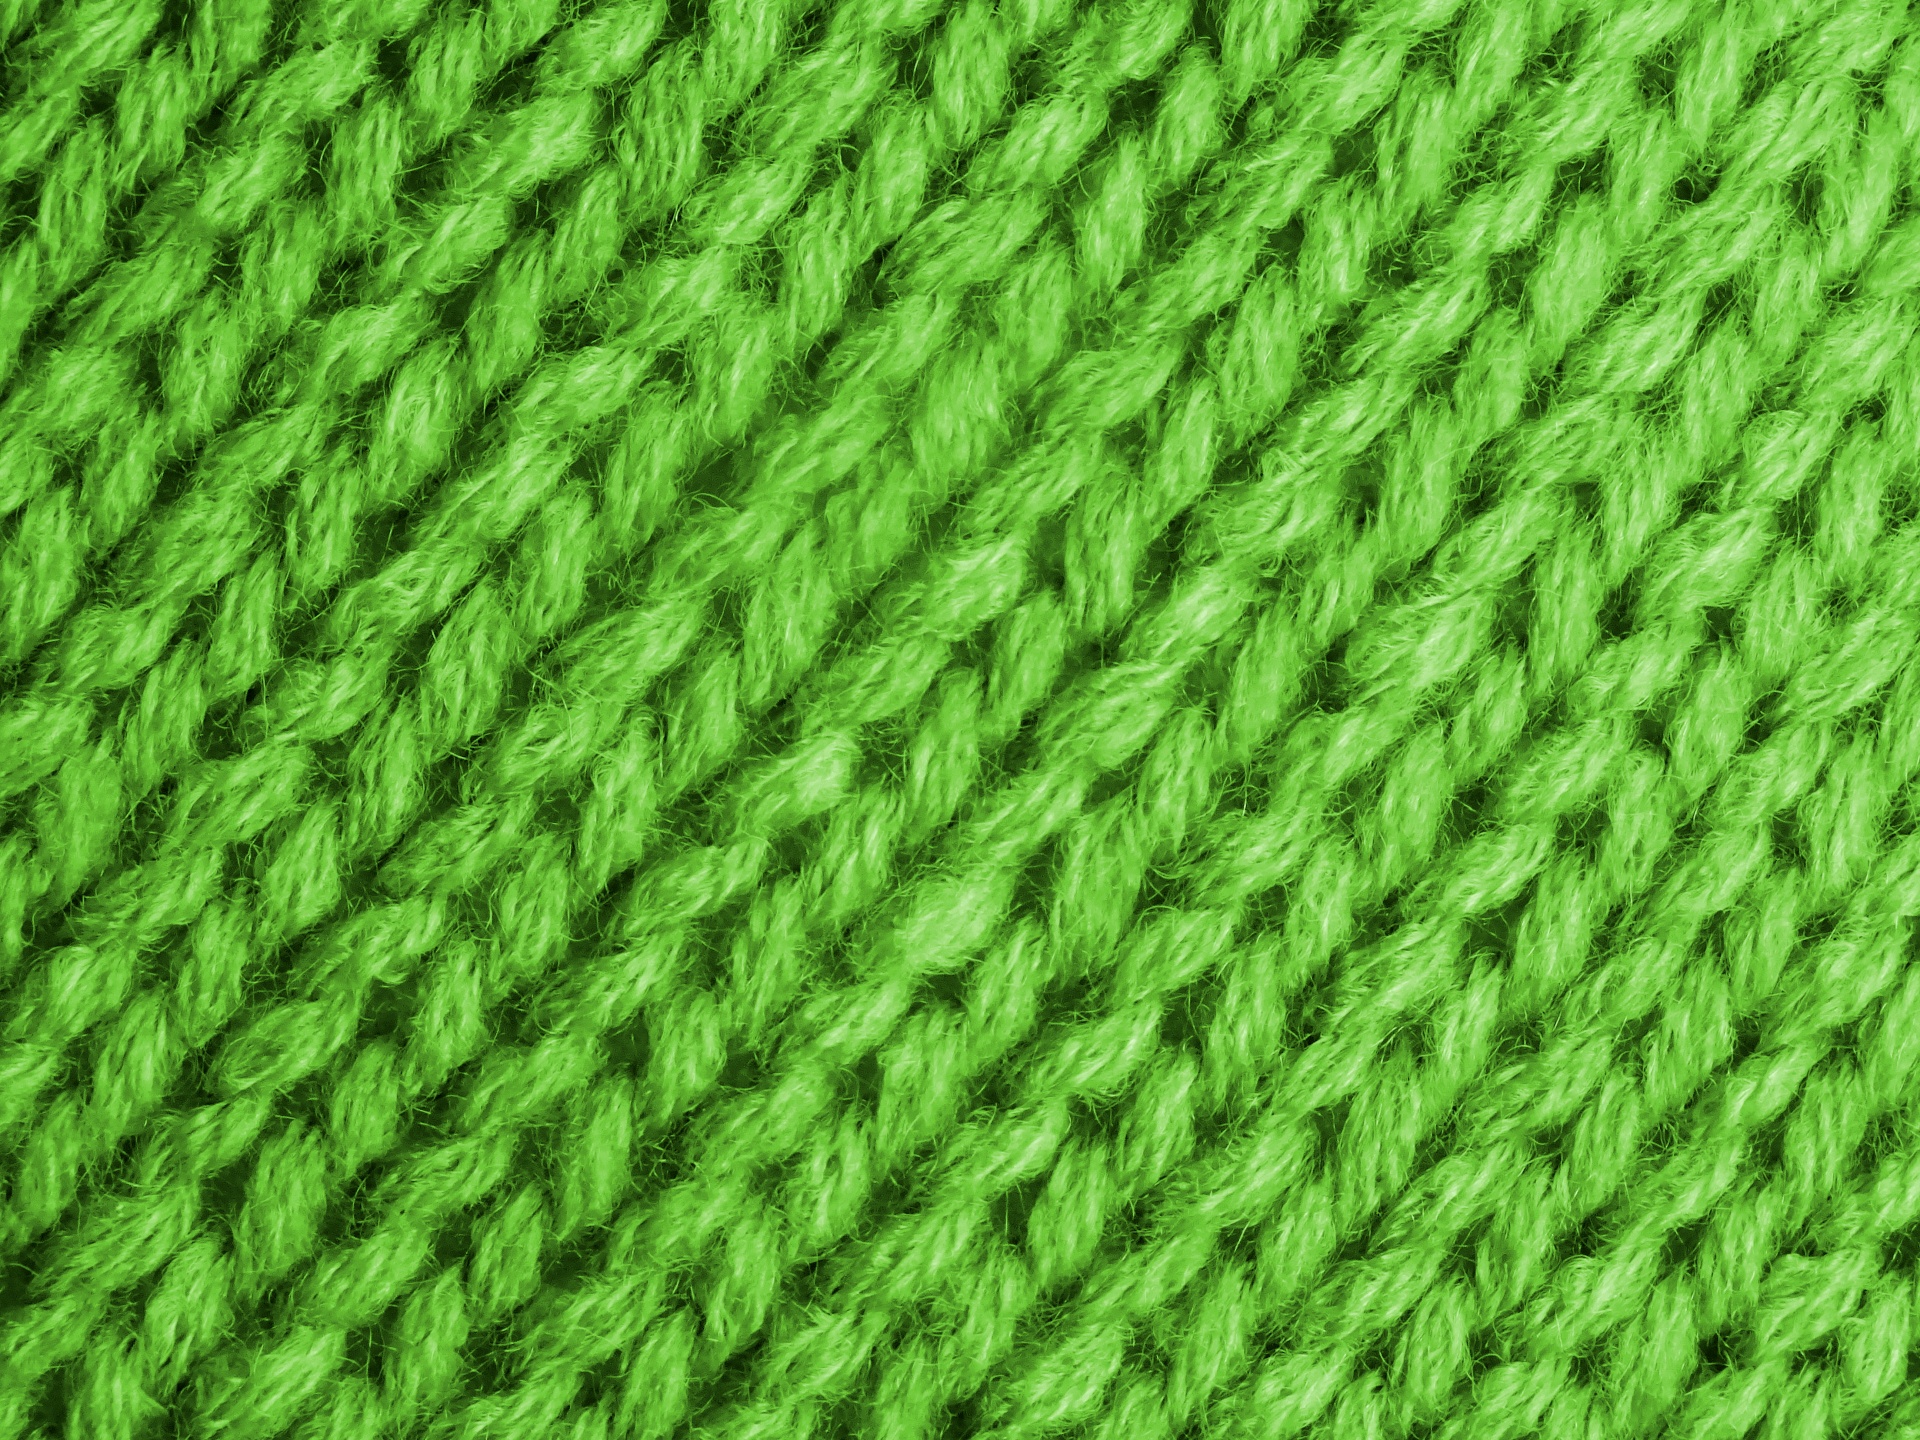 Download Free Photo Of Green Woolen Knitting Stitching